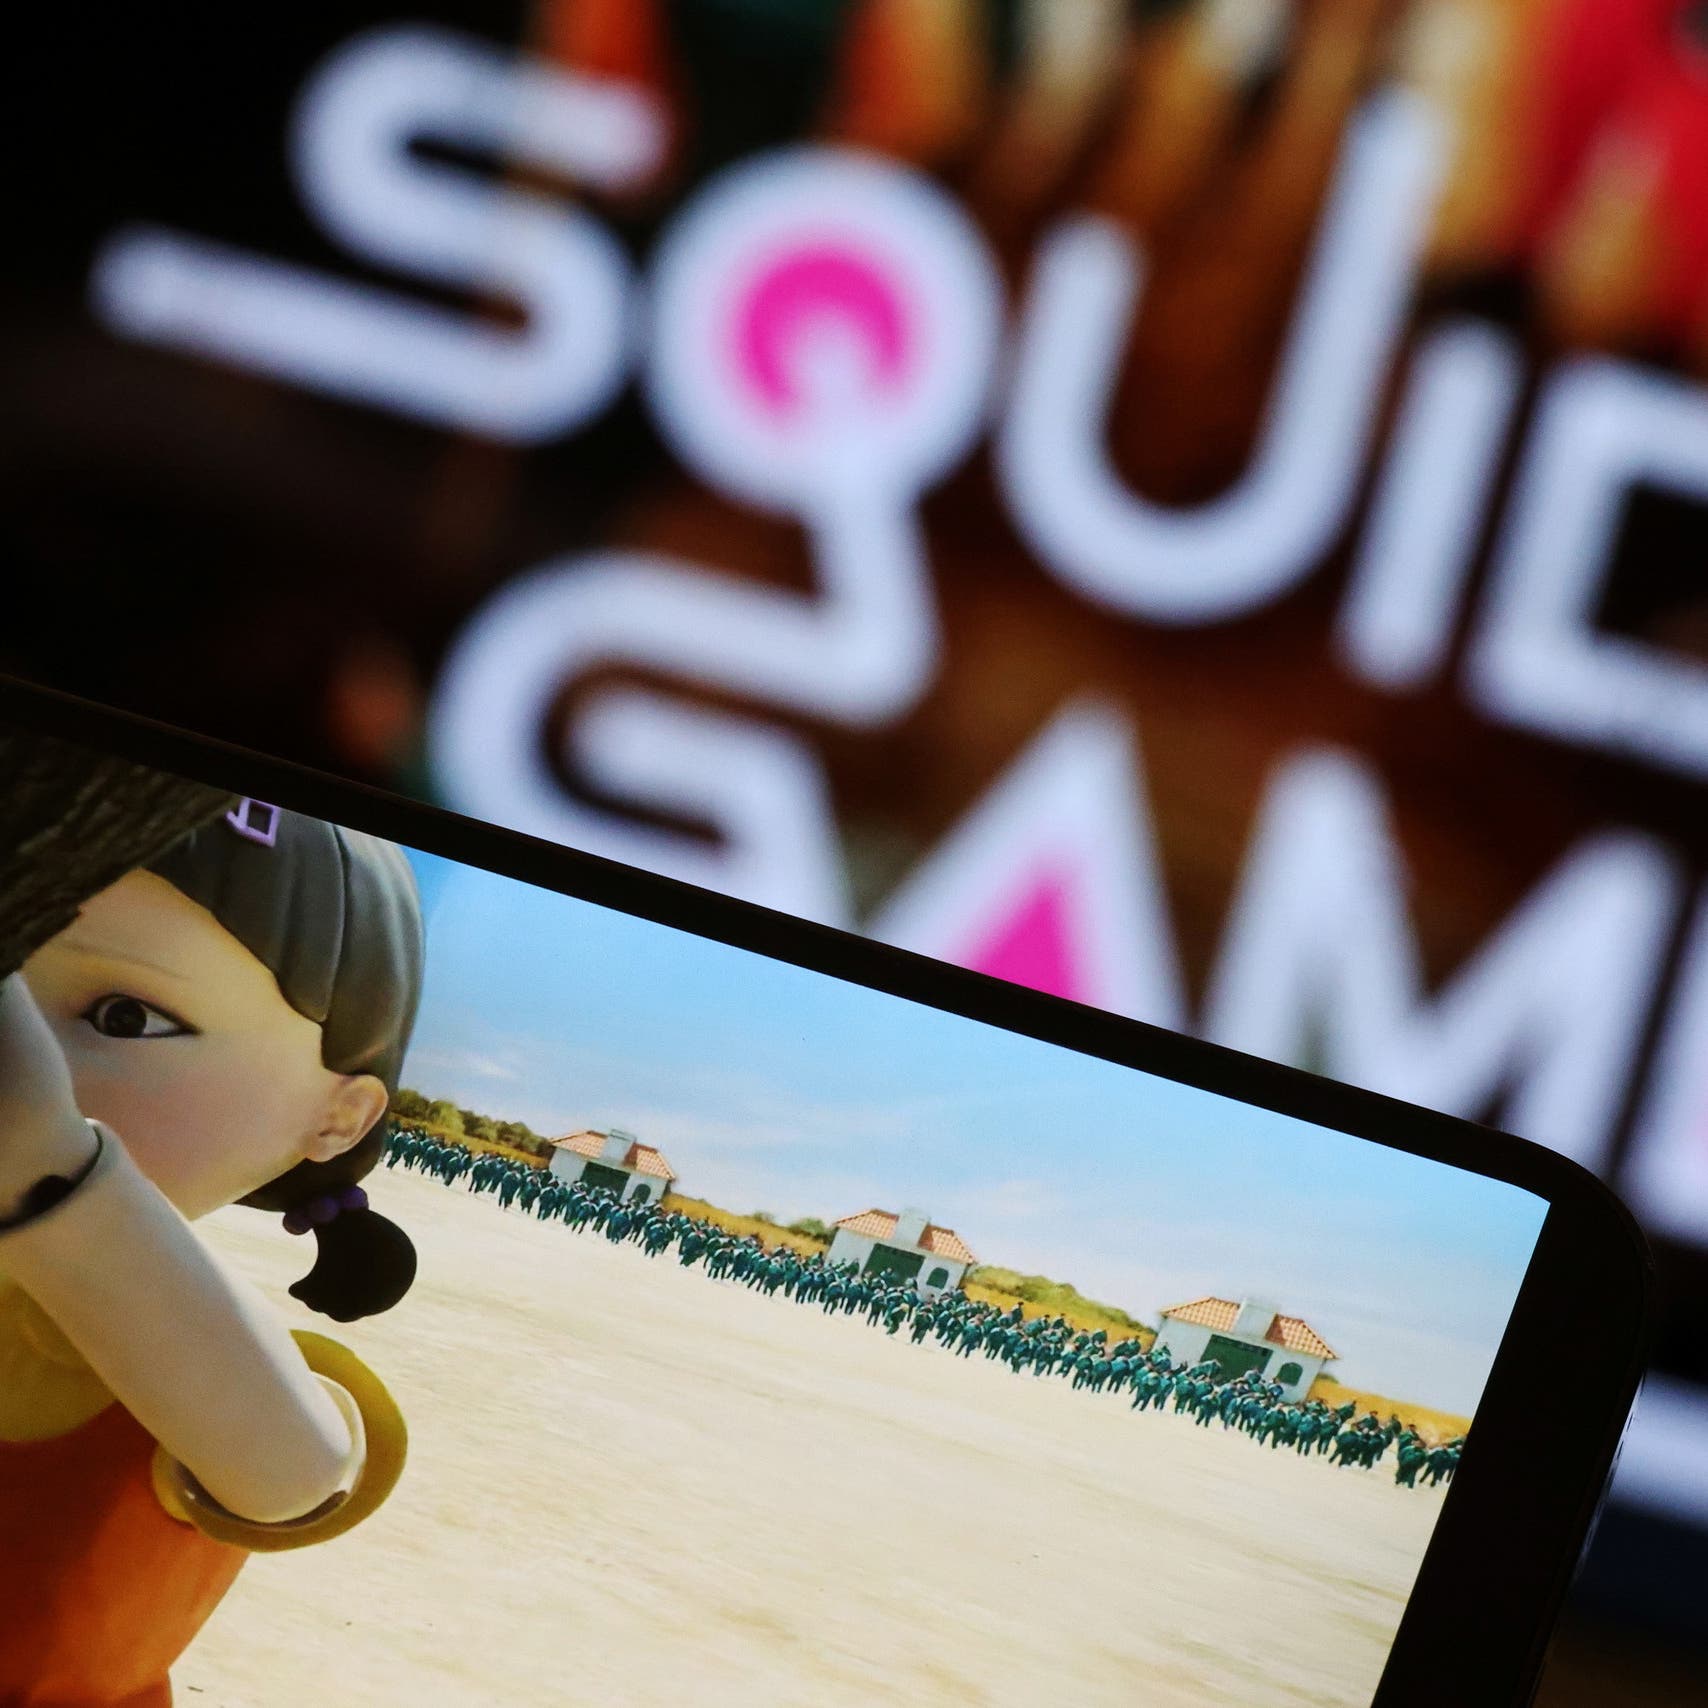 ‘Squid Game’ becomes Netflix’s biggest original show debut